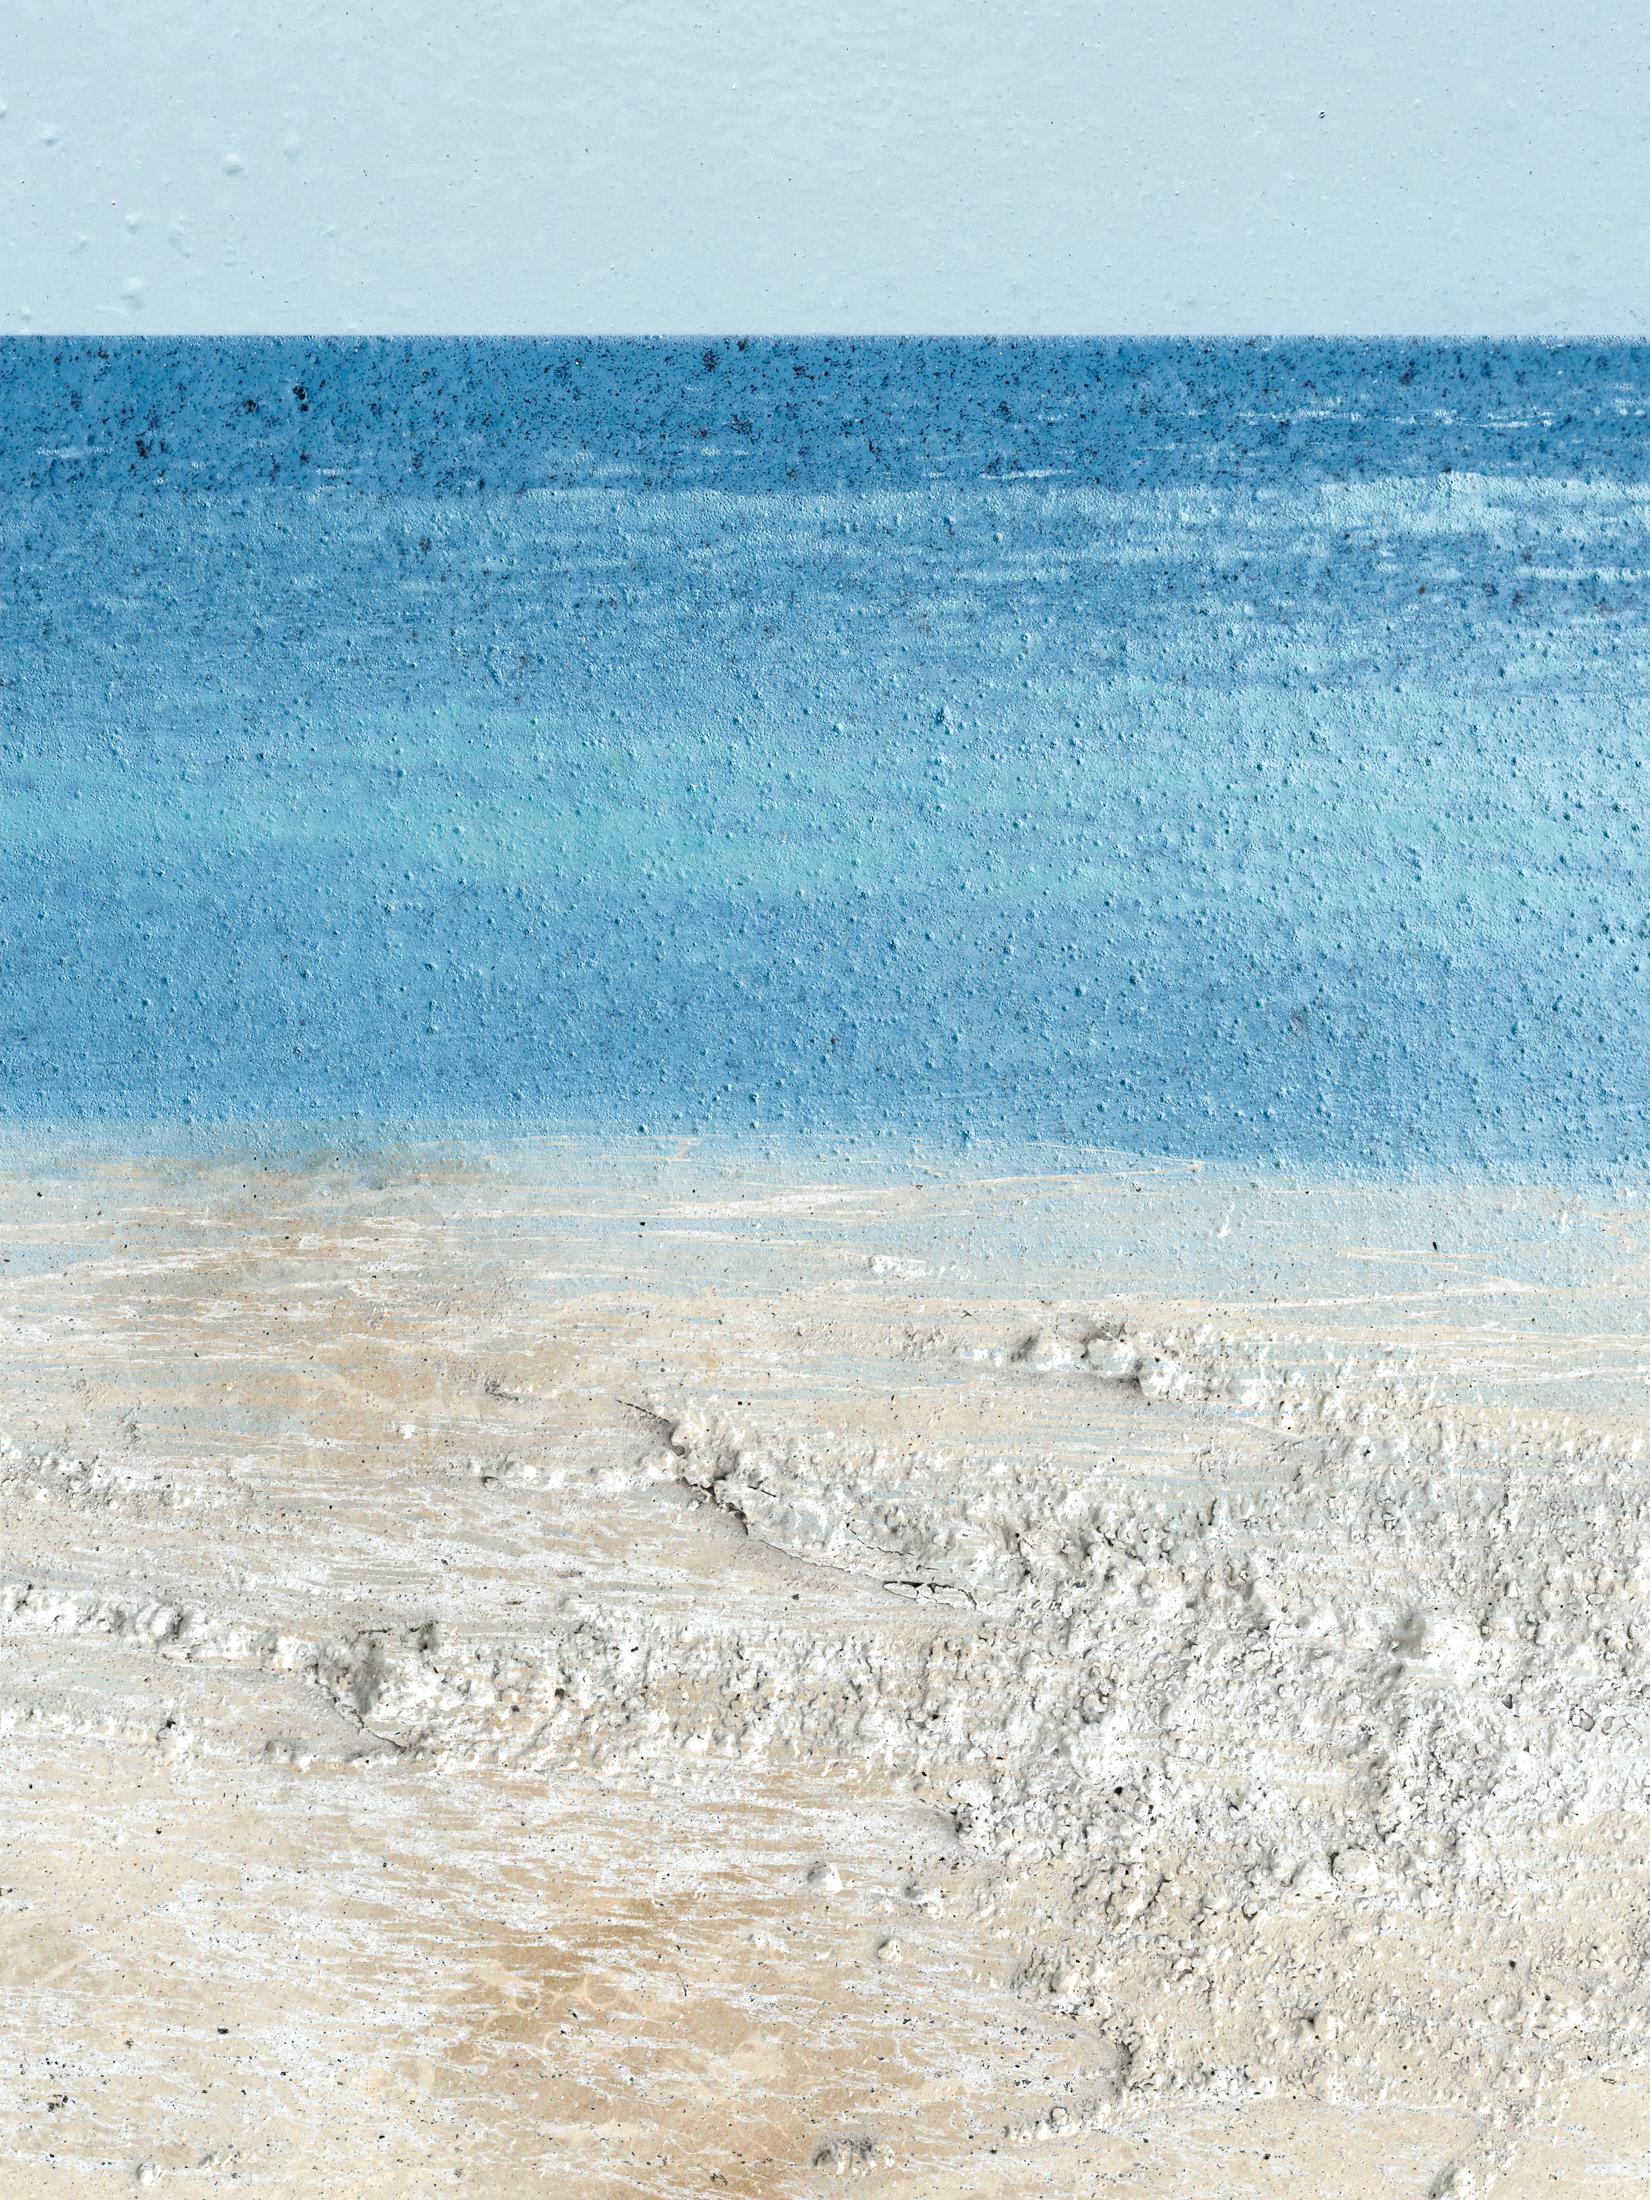 Uncontained Consumption: Beach Milk Stones - composite photo, beachscape